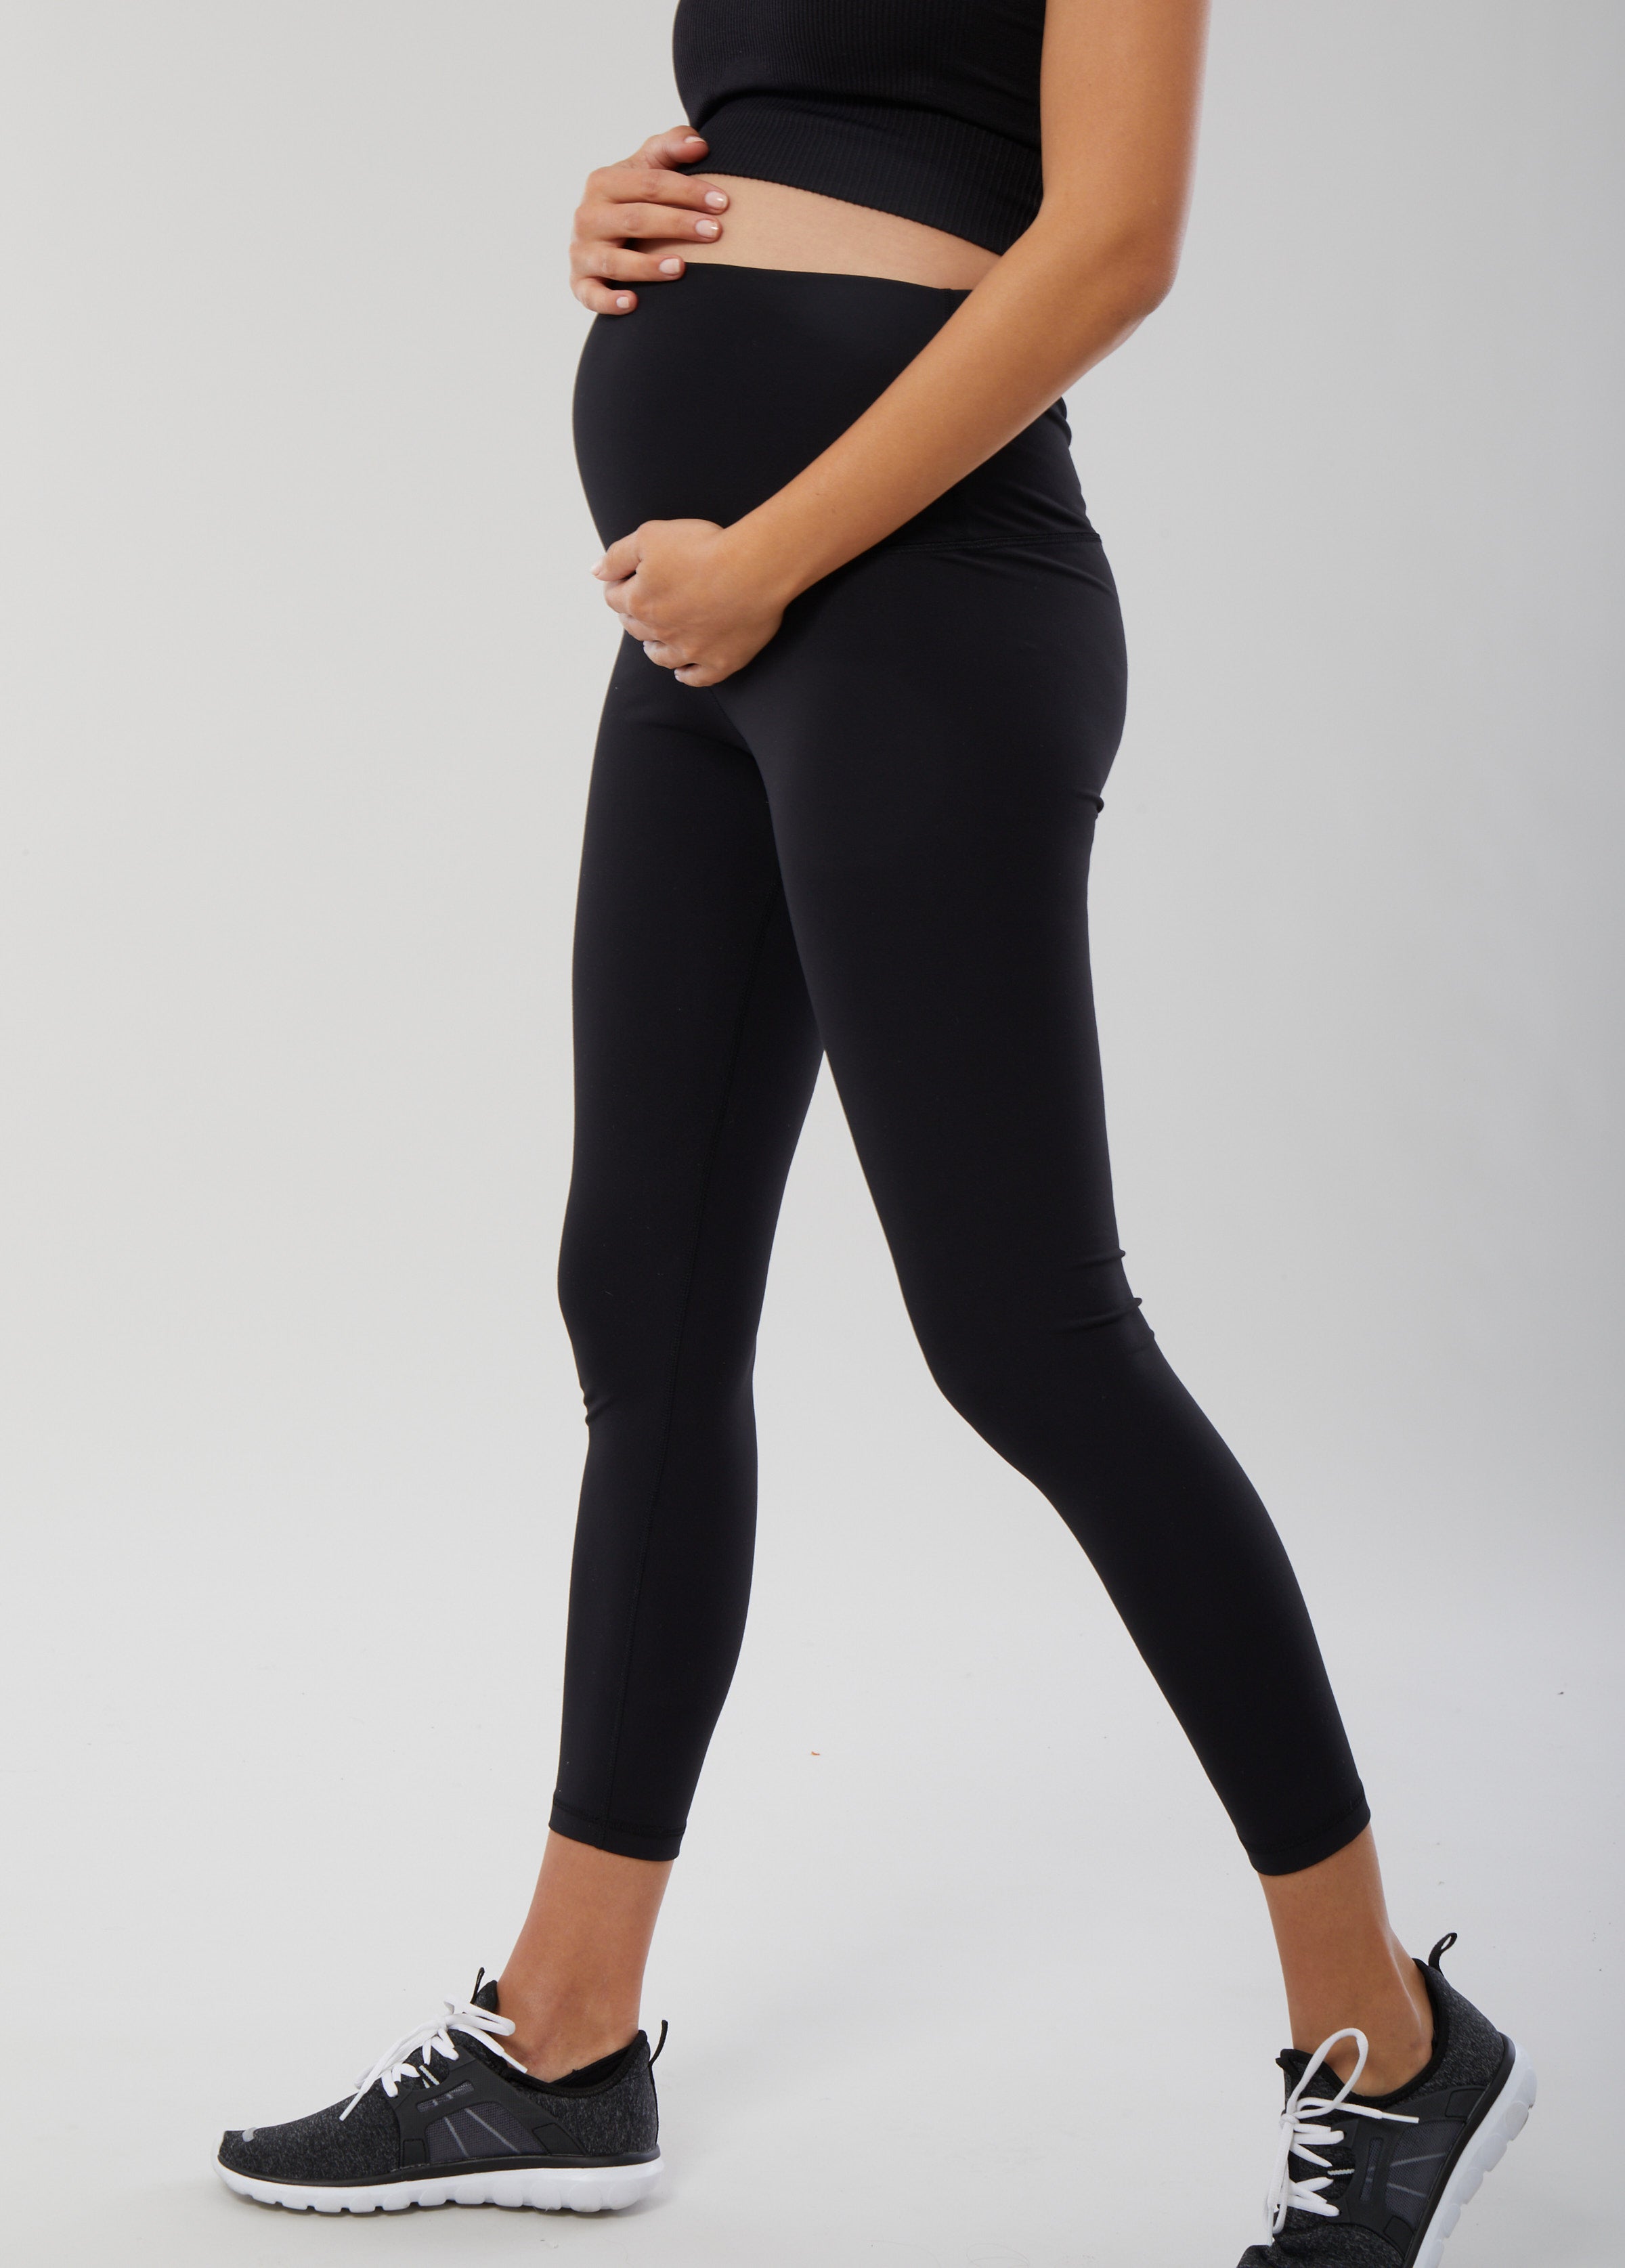 Folding Pregnancy Leggings - High Waist or Under-Belly Support